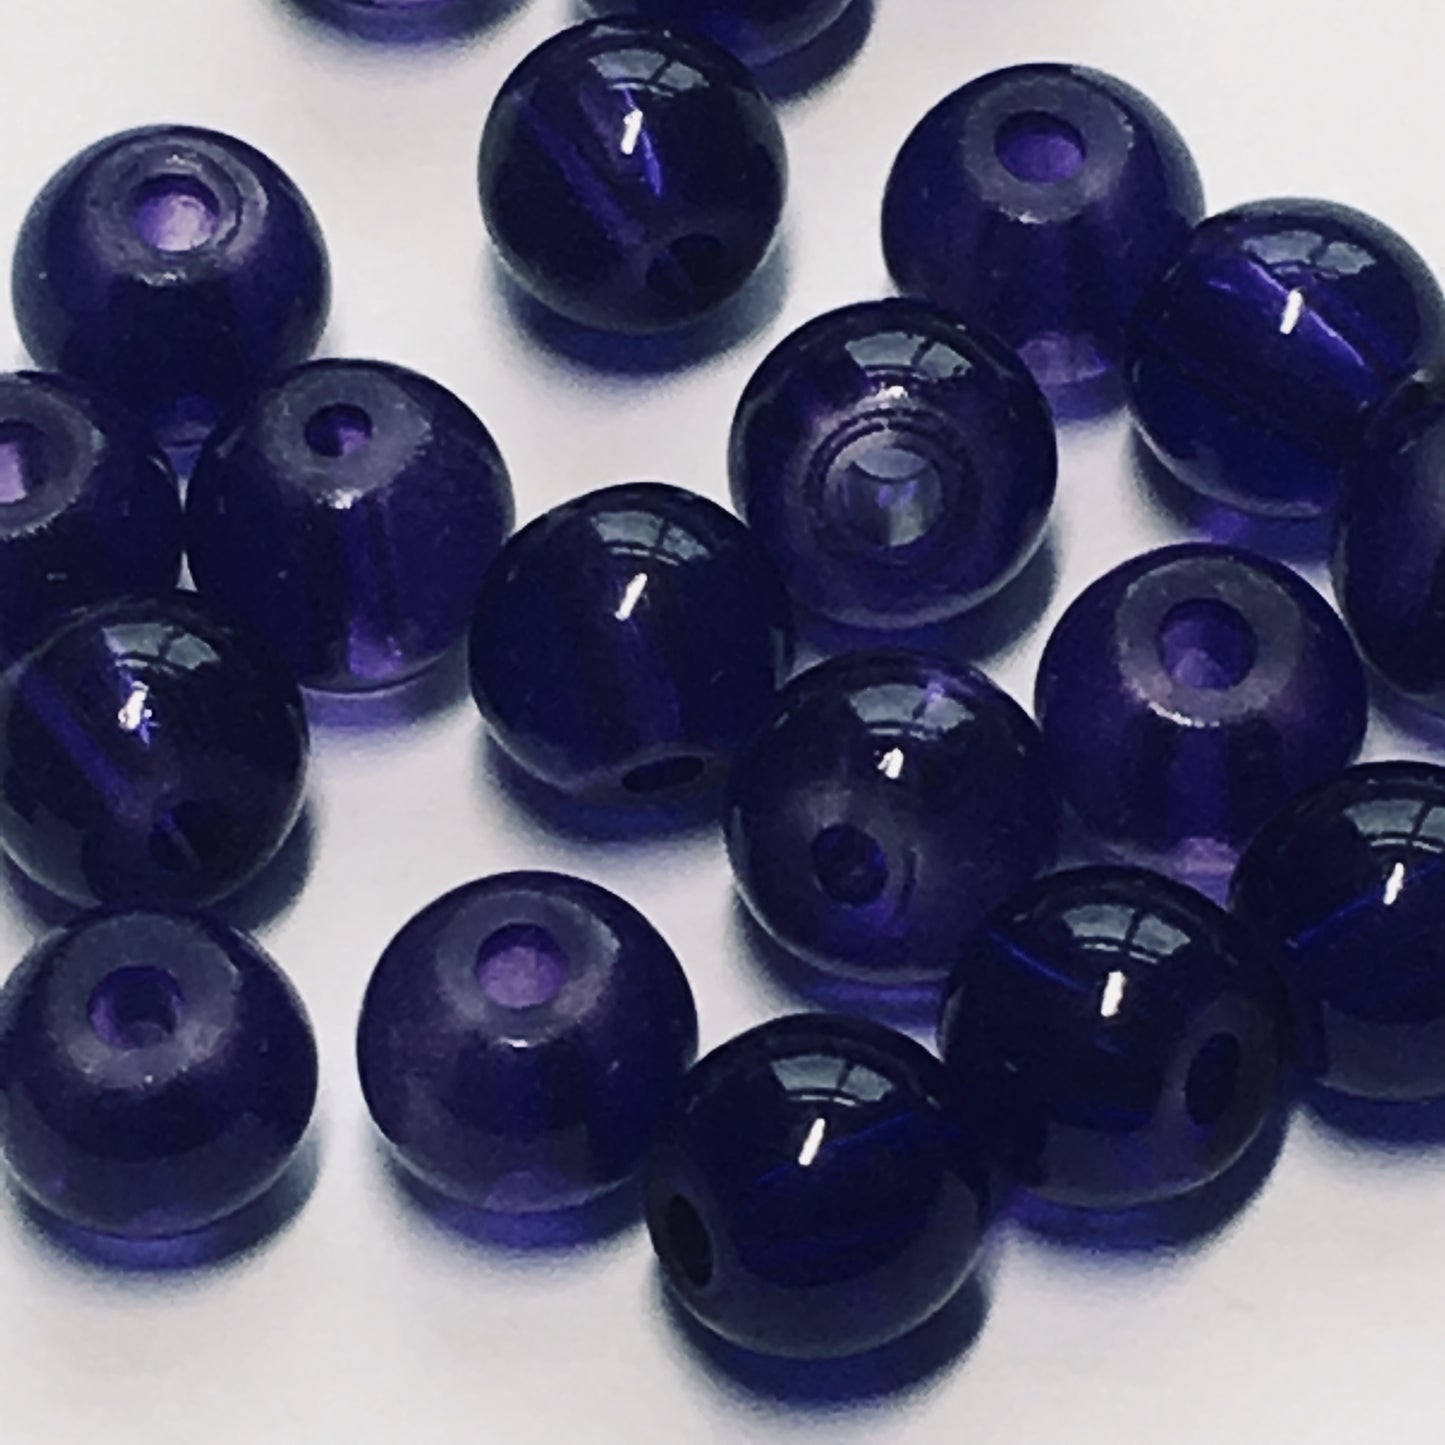 Transparent Dark Purple Round Glass Beads, 5 mm, 24 or 25 Beads